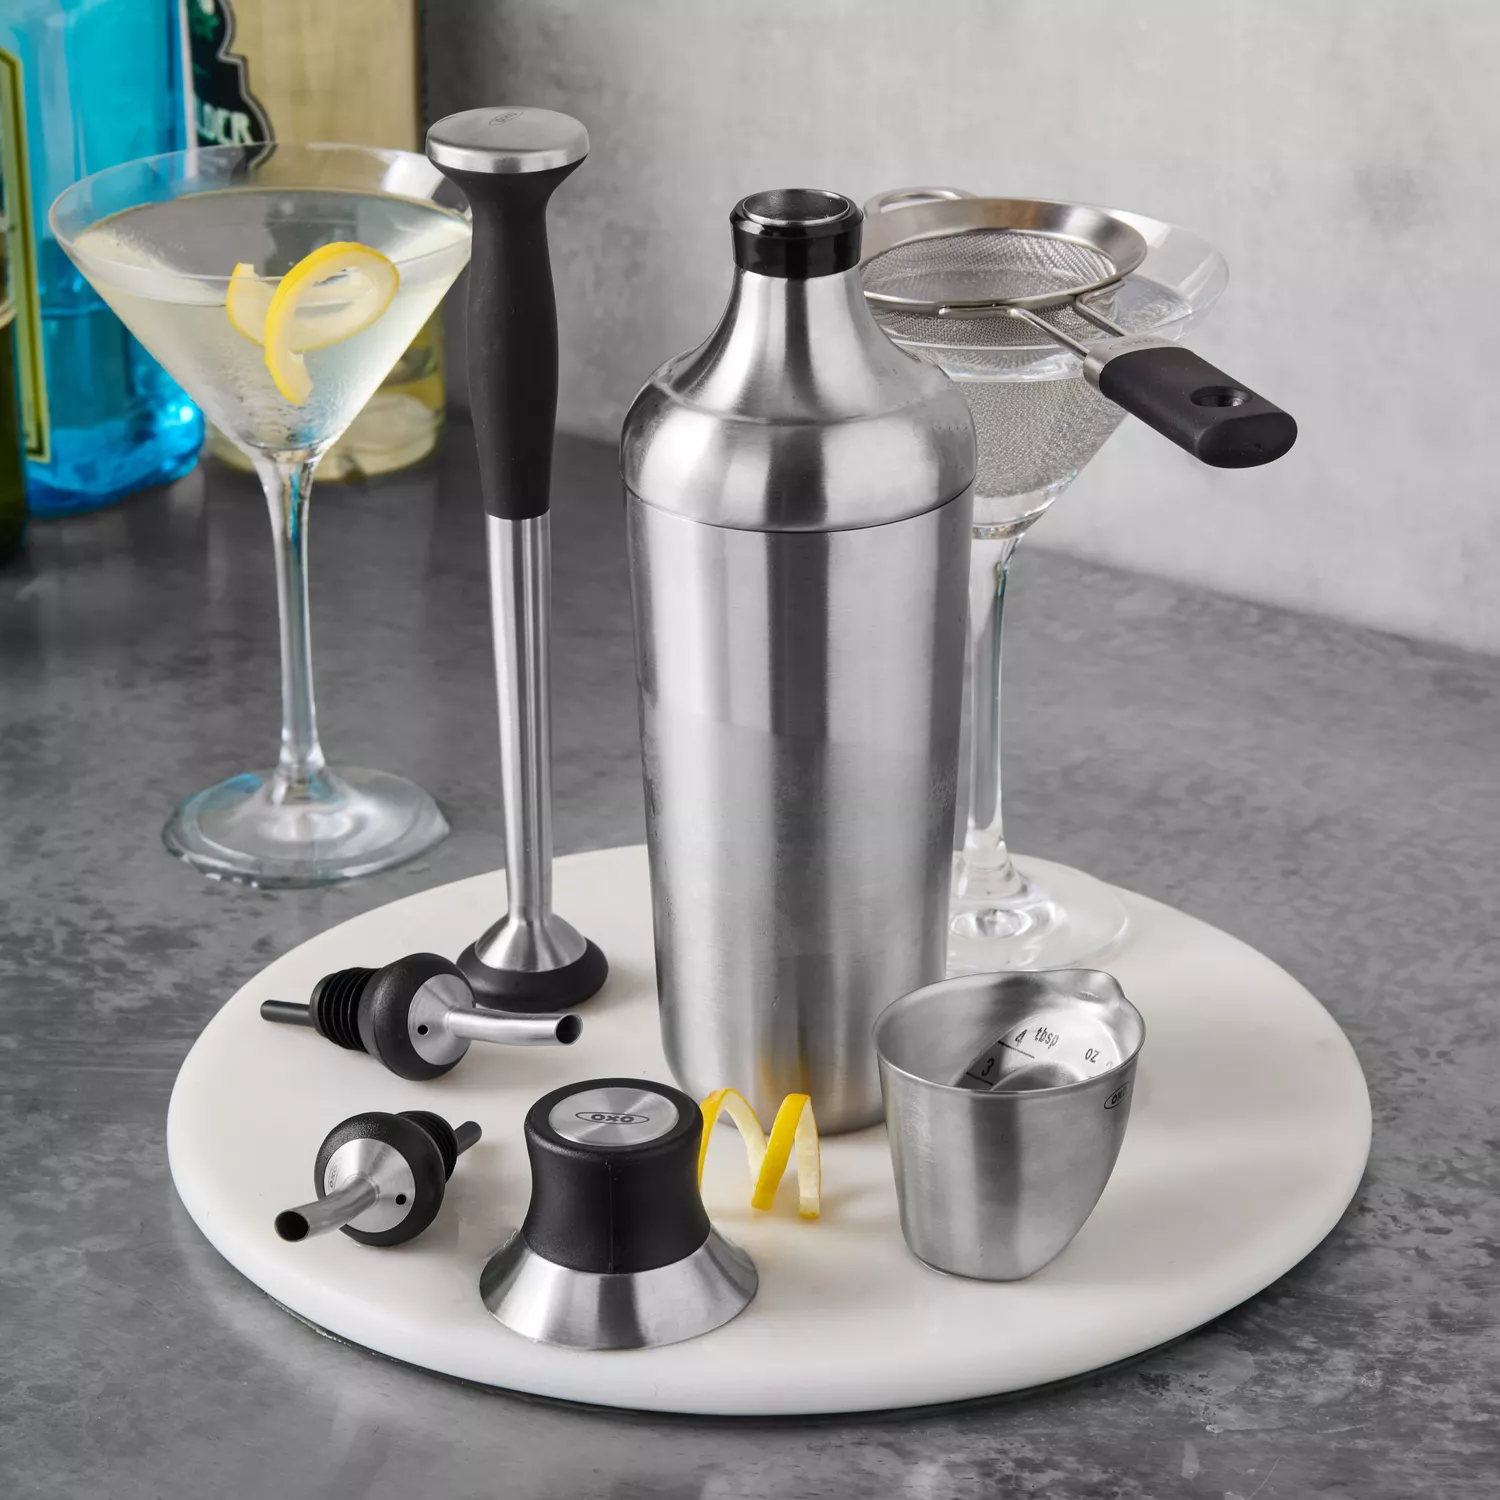 OXO SteeL Cocktail Shaker